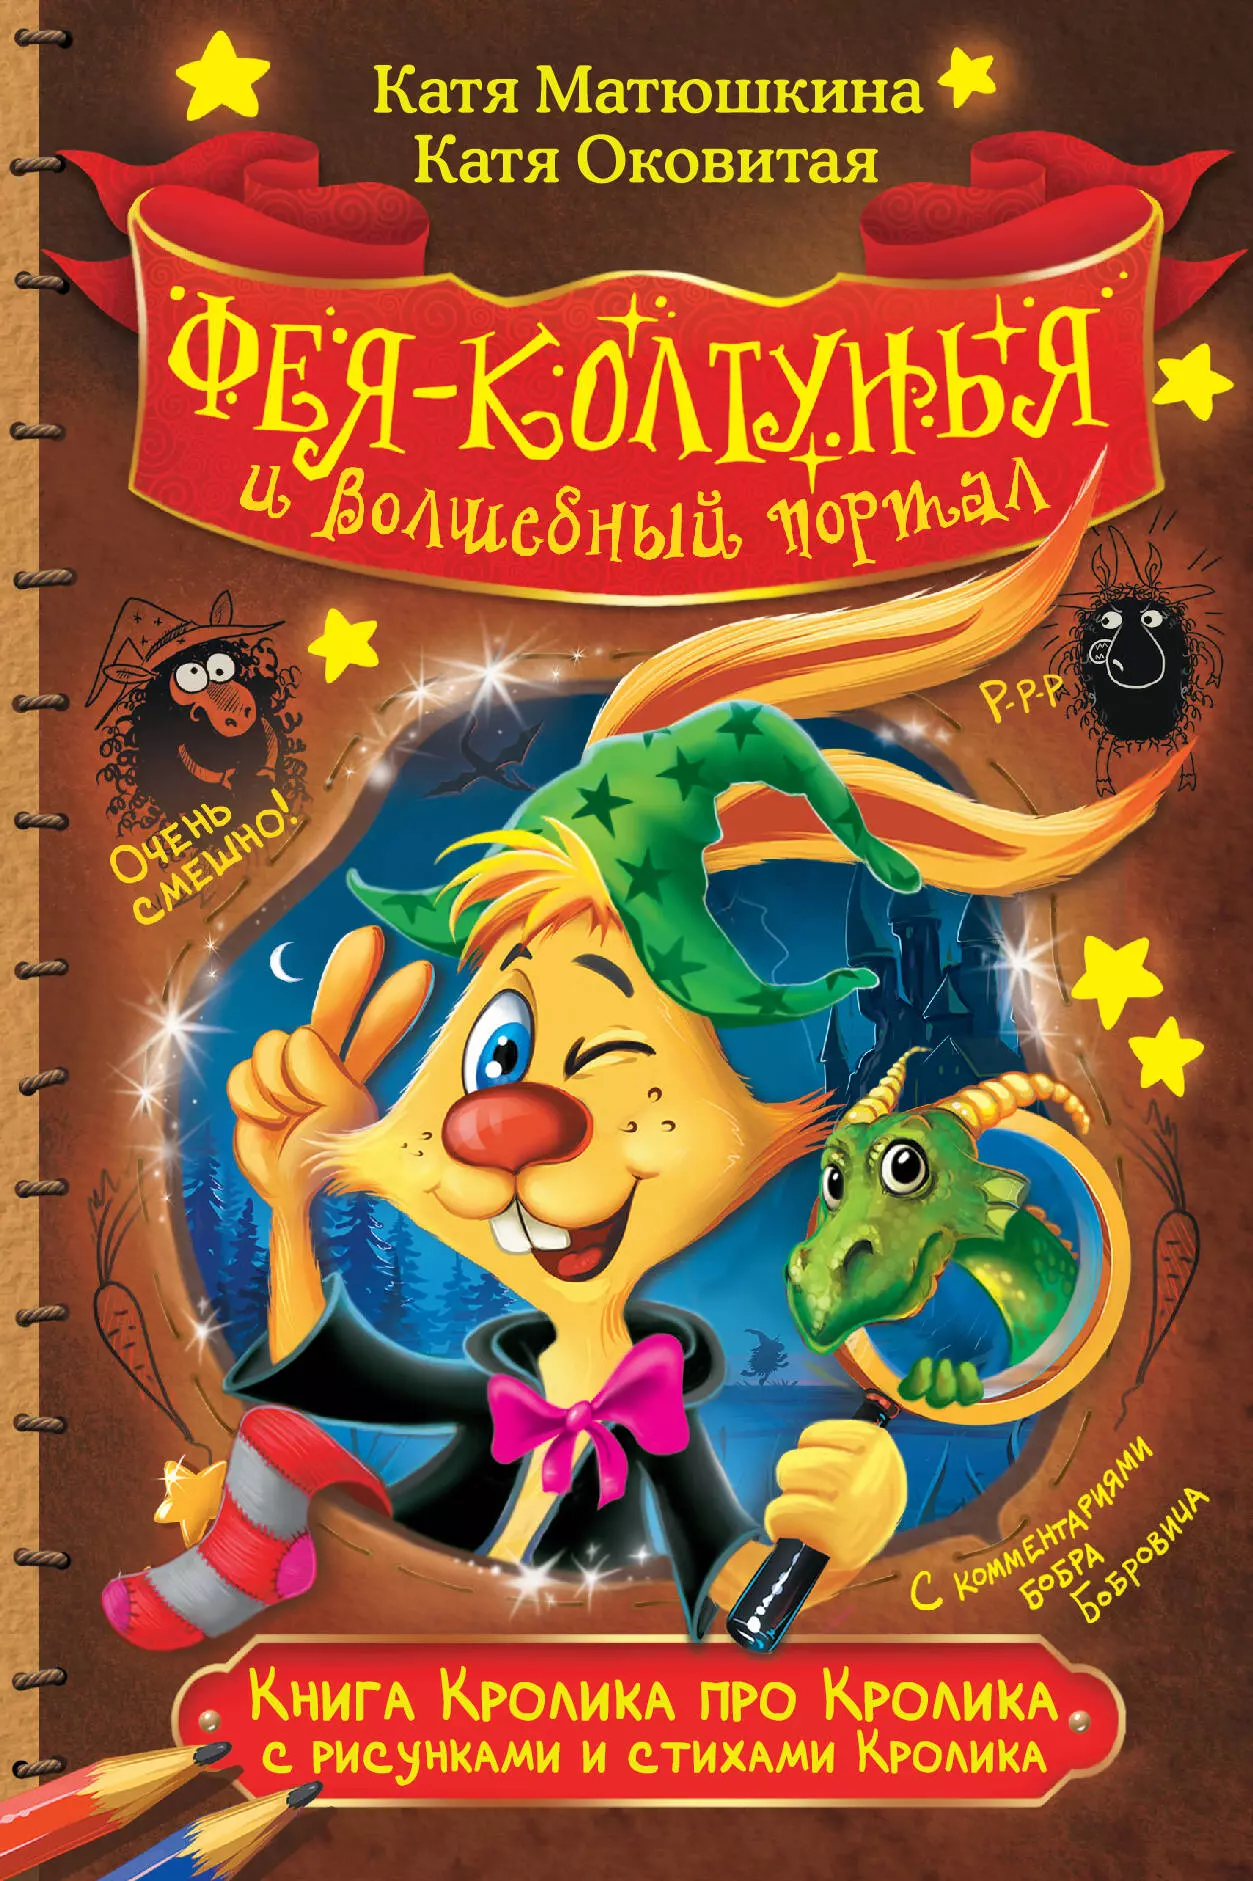 Матюшкина Екатерина Александровна - Книга Кролика про Кролика со стихами и рисунками Кролика